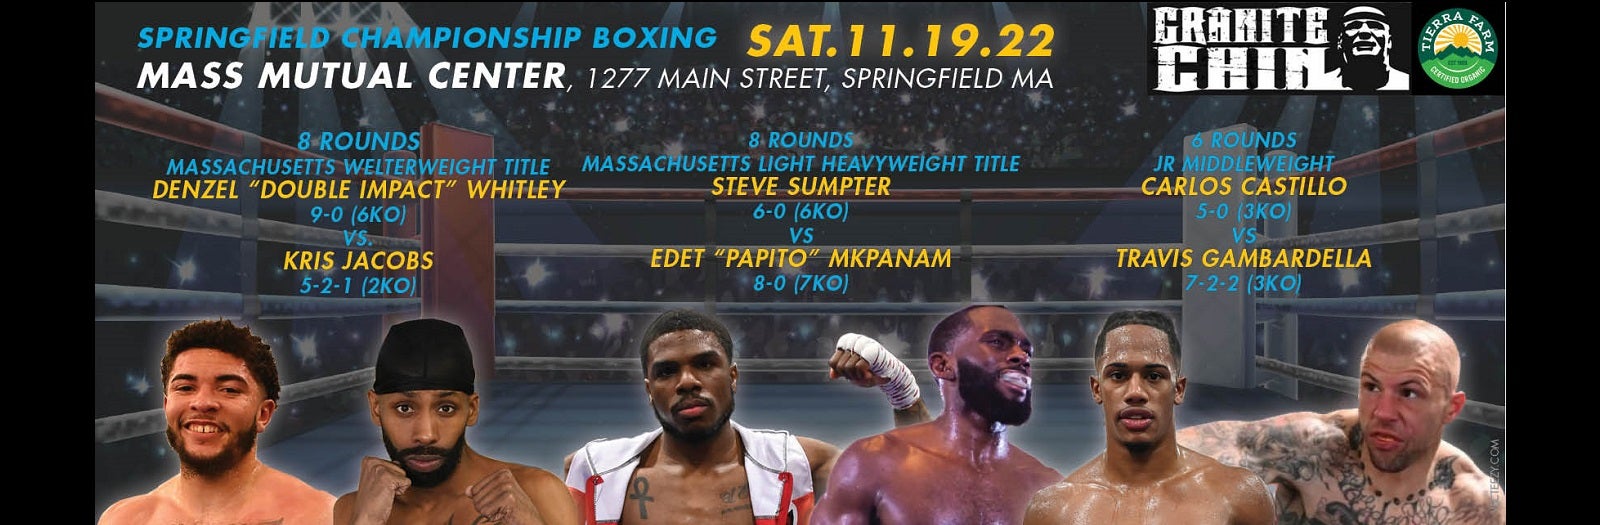 TONIGHT - Springfield Championship Boxing